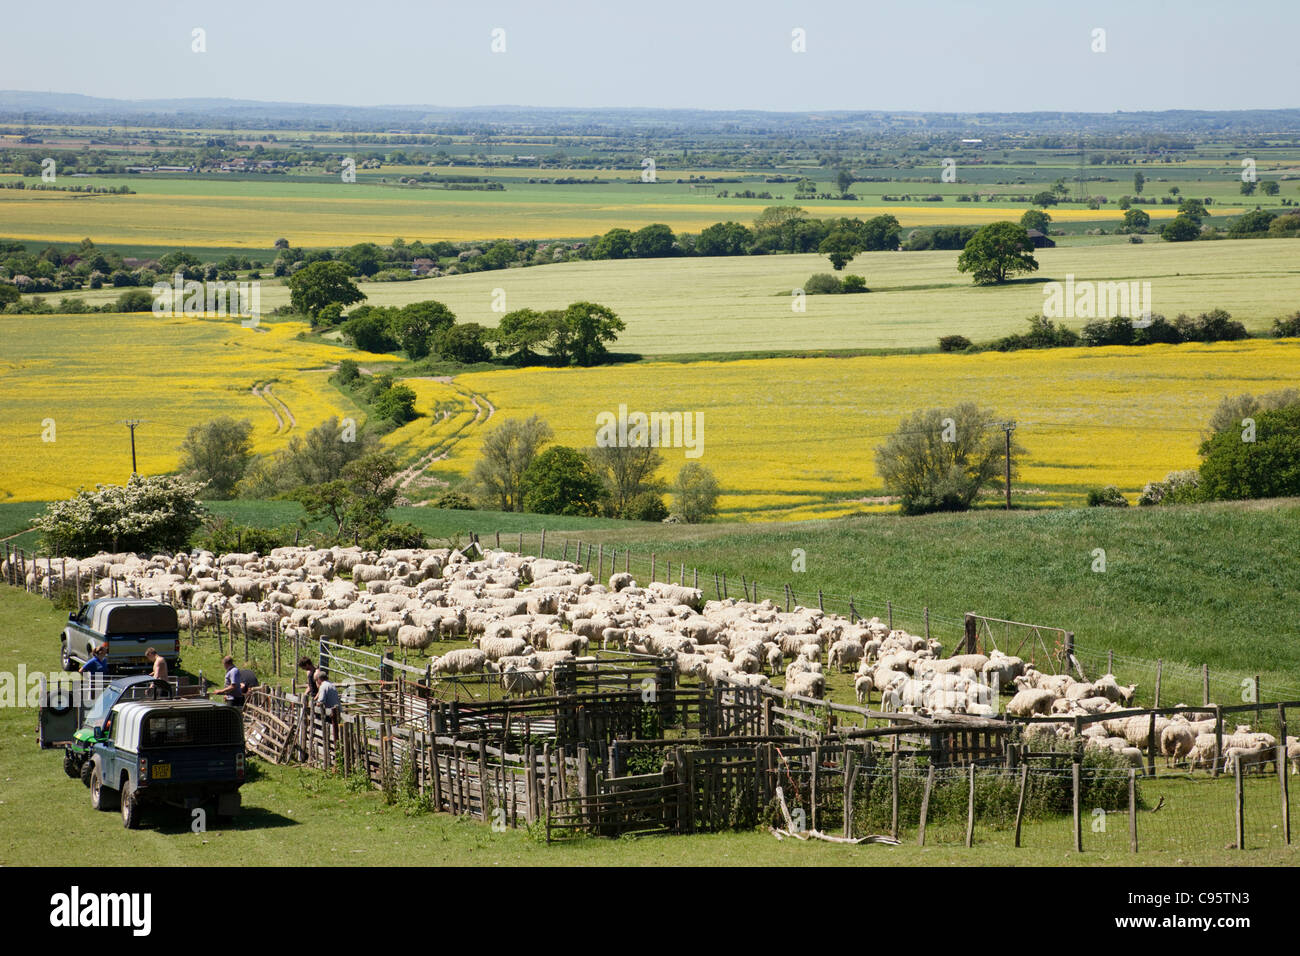 England, Kent, Romney Marsh, Sheep in Pen Stock Photo